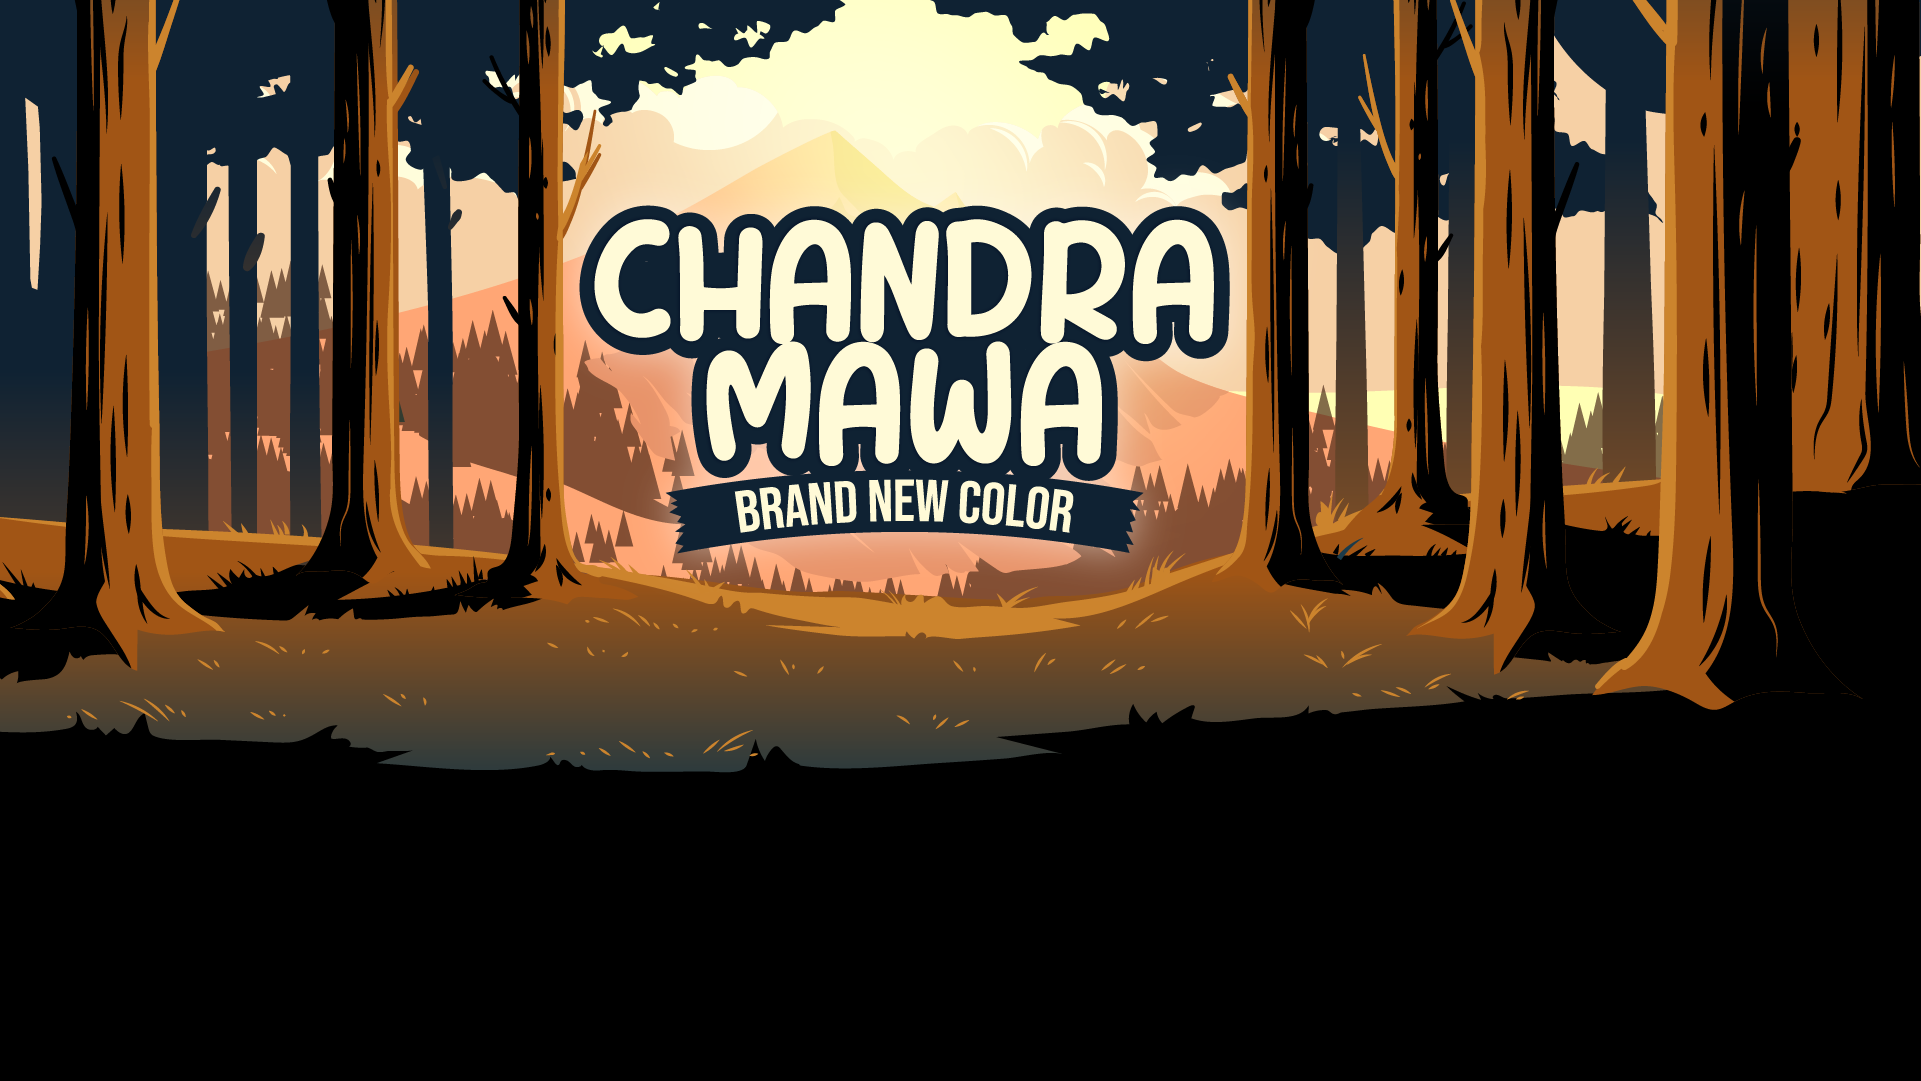 Chandramawa: Brand New Color